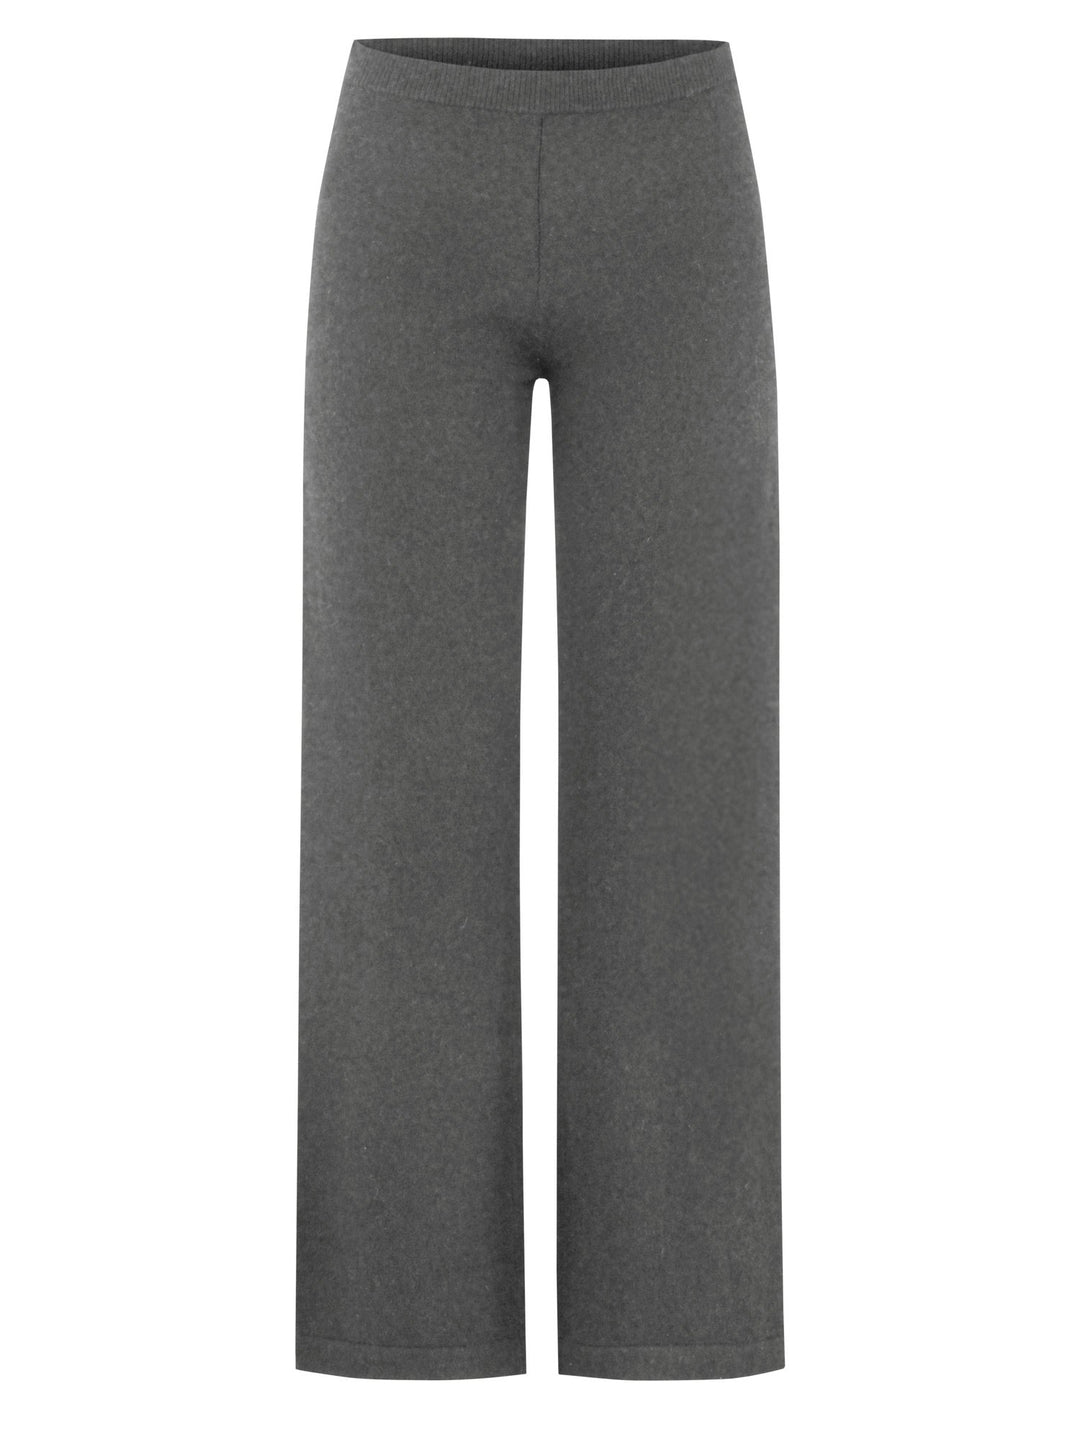 Kashmina "Classic" pants in 100% pure cashmere. Color: dark grey. Scandinavian design by Kashmina. 